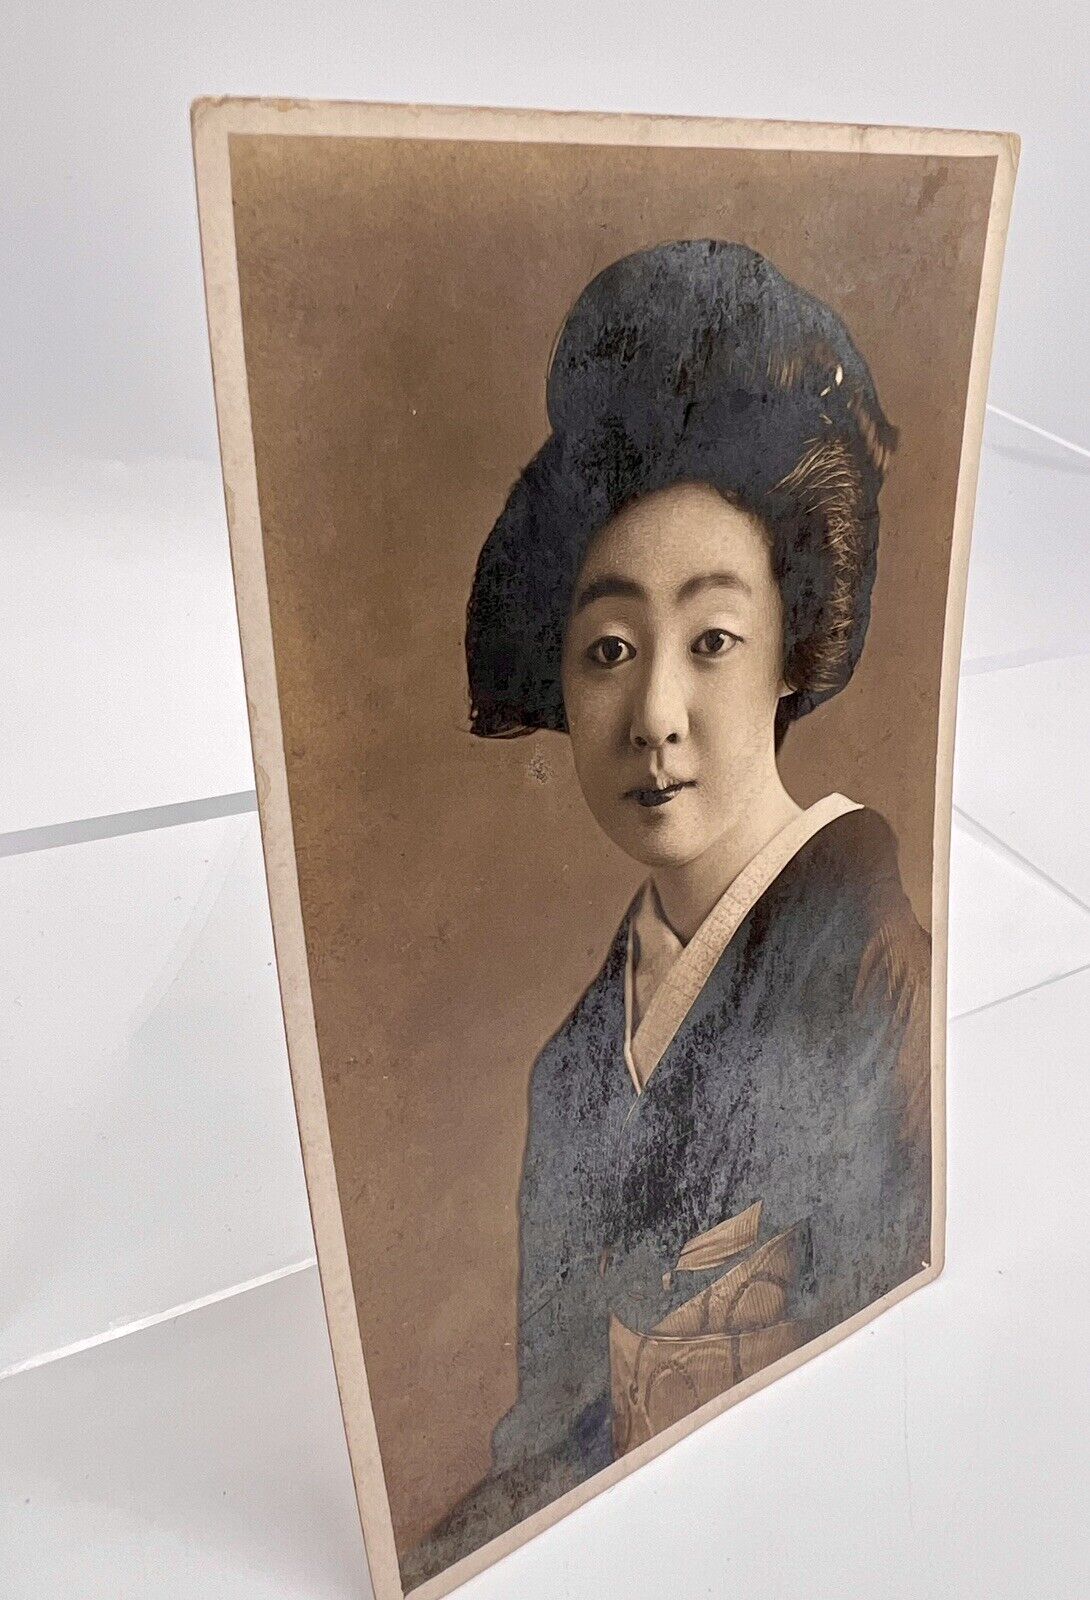 Japanese Vintage RPCC Postcard Photo Geisha Woman Traditional Dress Portrait